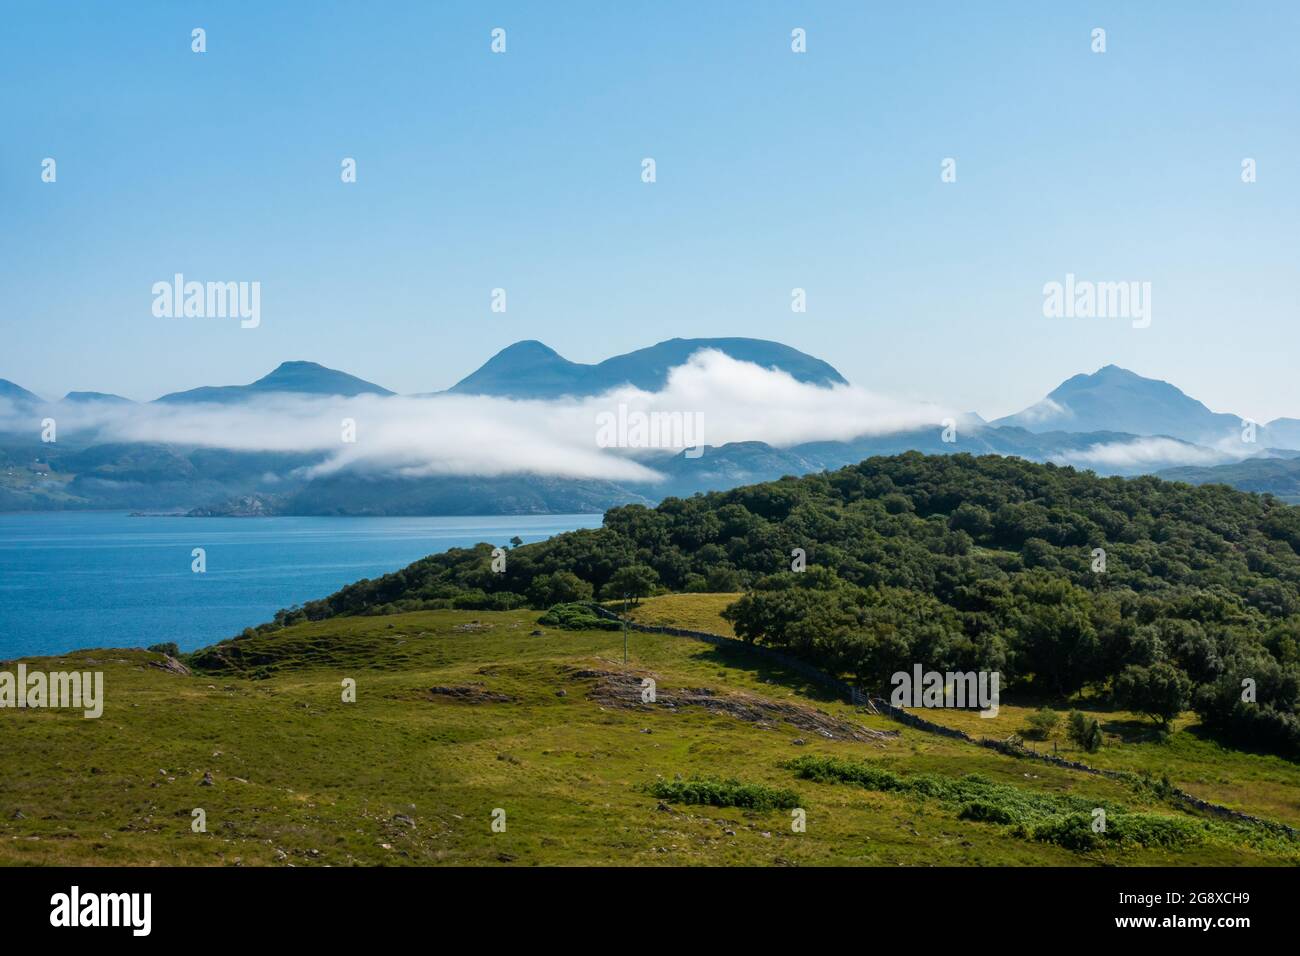 Loch Torridon on the Applecross Peninsula, Scotland, with the Torridon mountains in the background Stock Photo